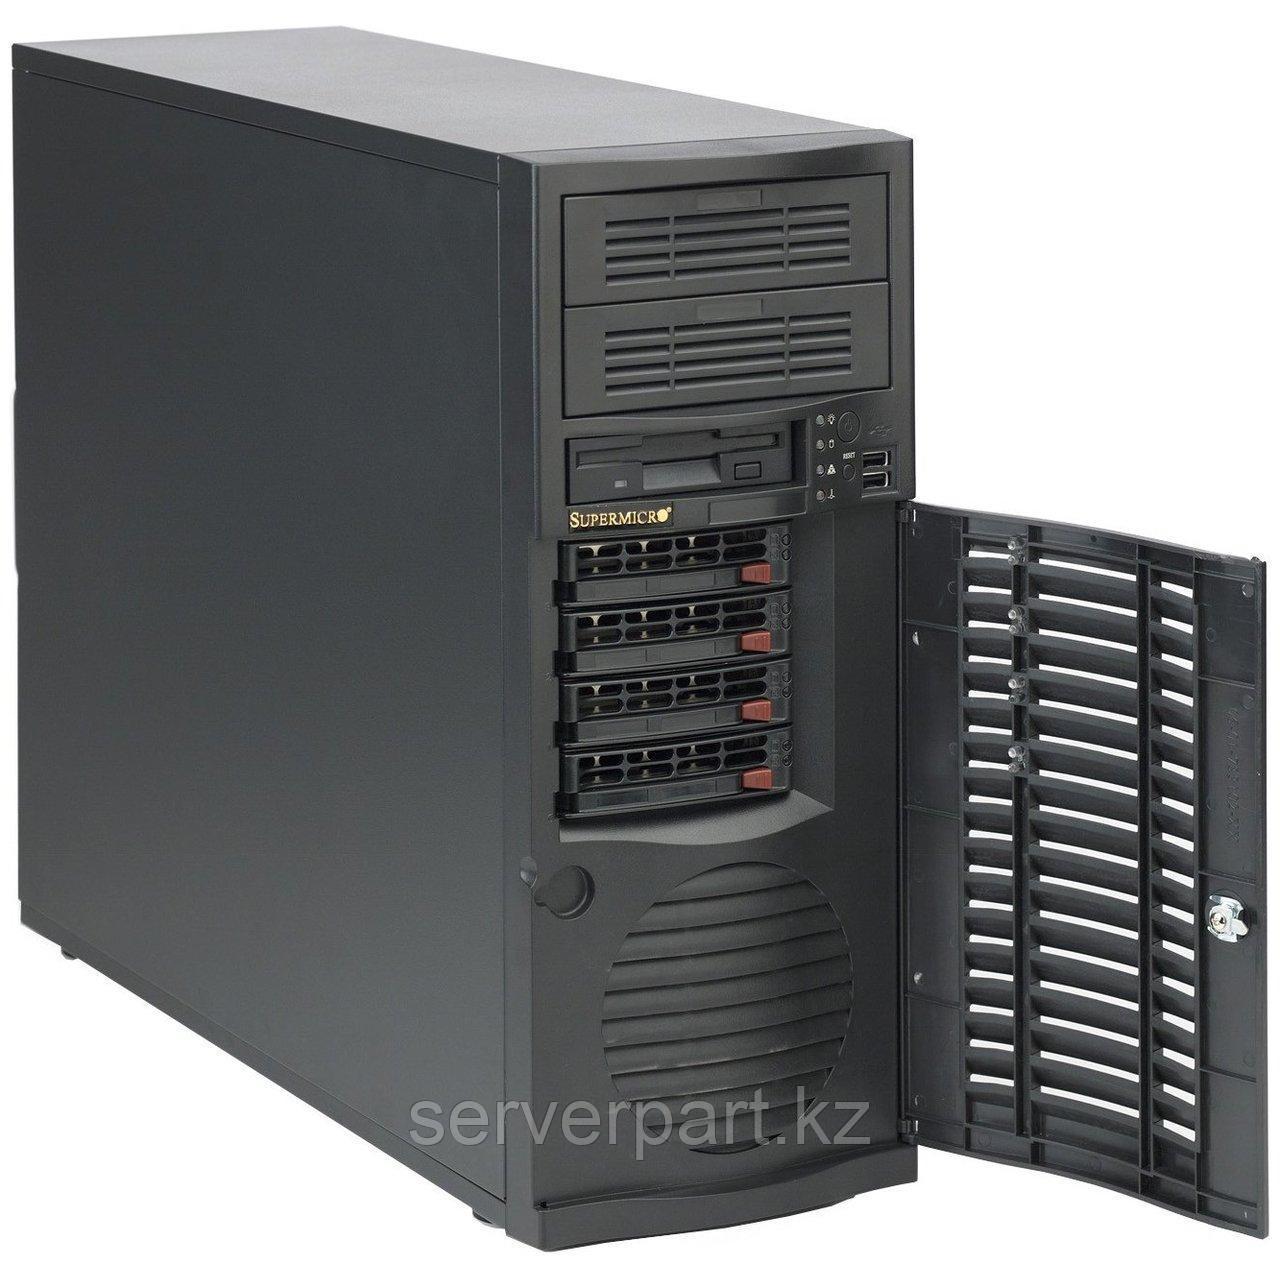 Сервер Supermicro 733T-500B\X10DRL-I Tower 4LFF/1х6-core Intel Xeon E5-2643v3 3.4GHz/no RAM/no HDD